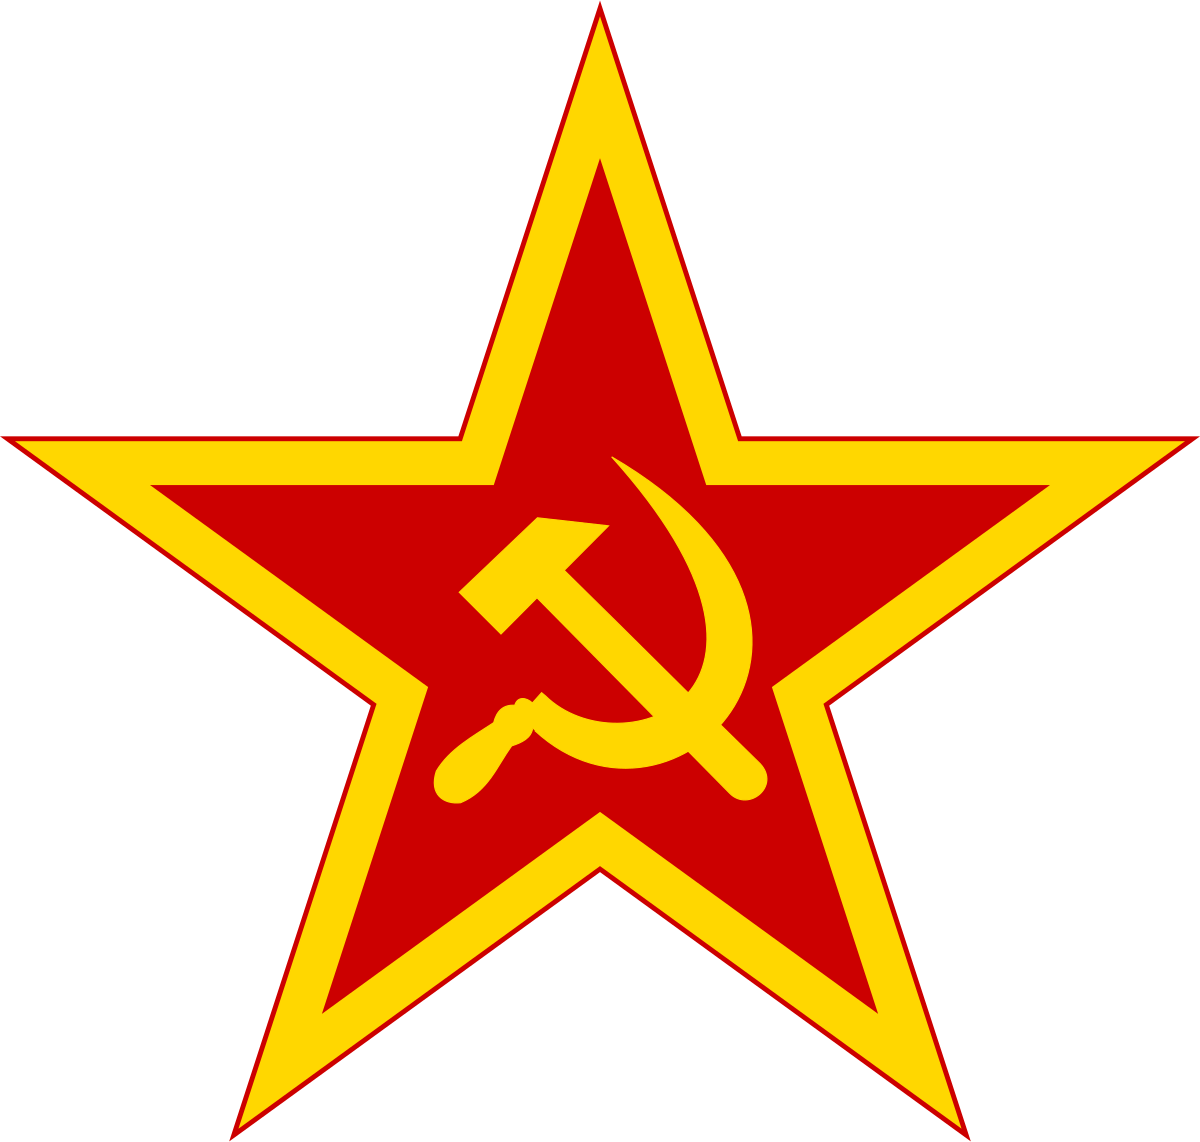 Communism Logo - Communist symbolism